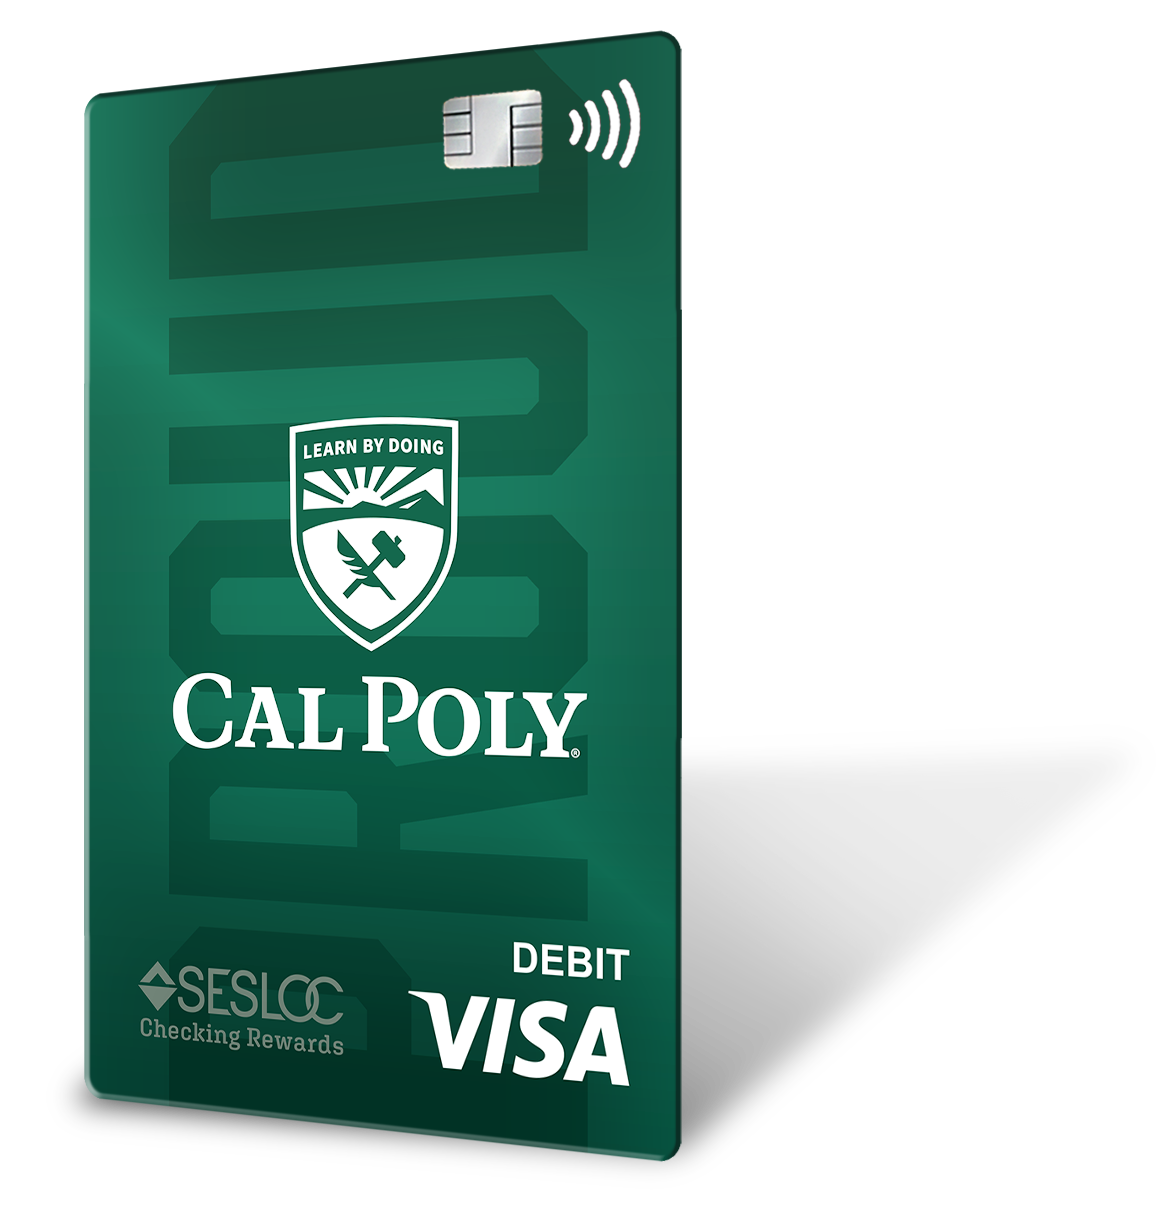 SESLOC's Cal Poly debit card